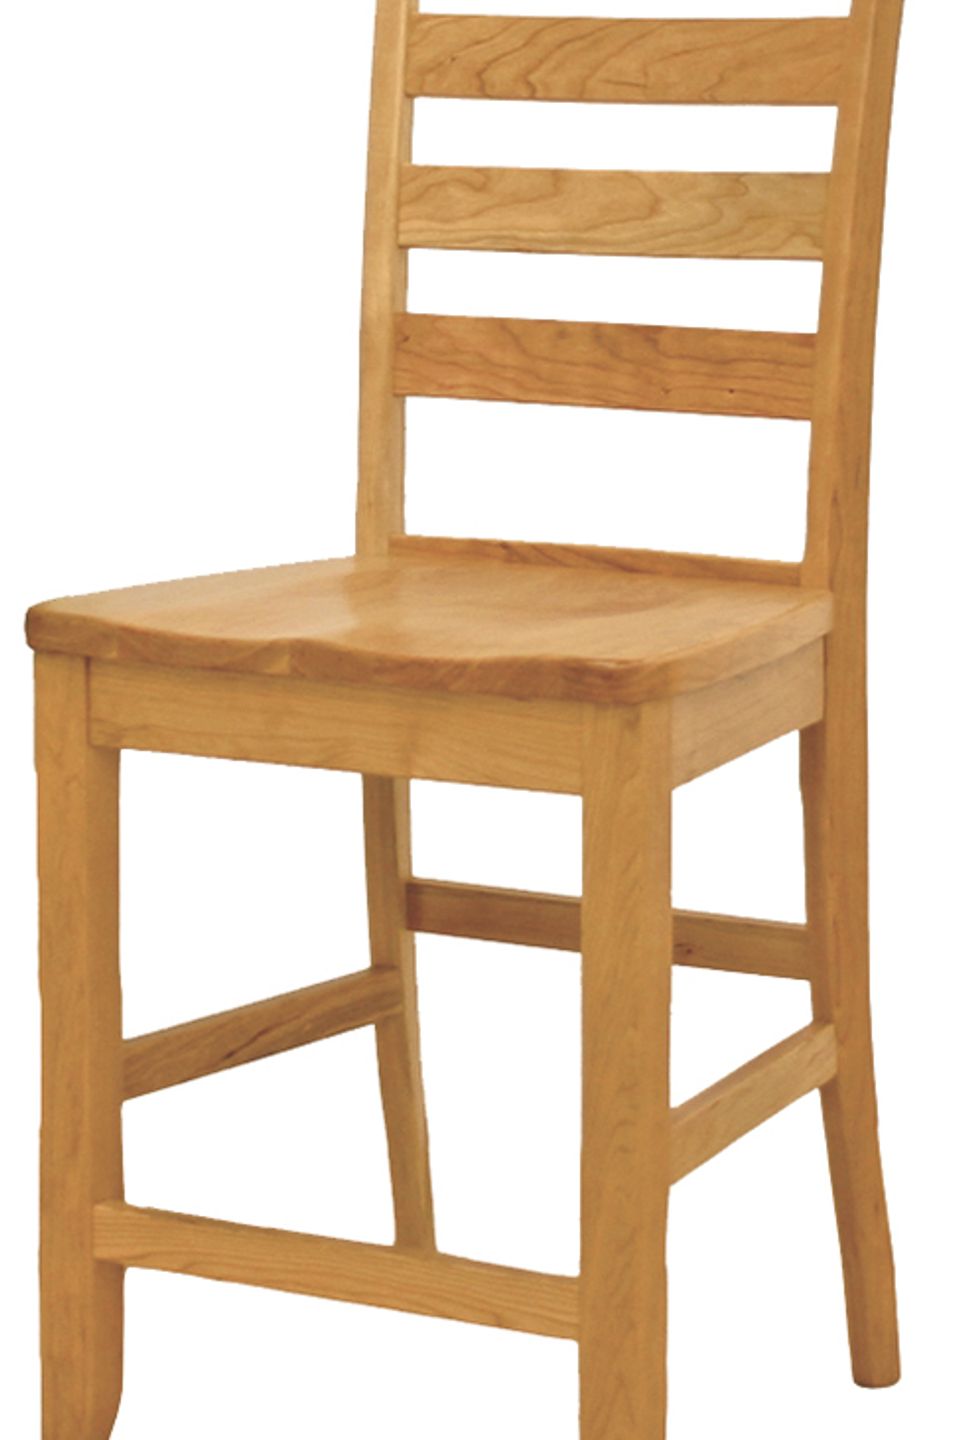 Cd shaker ladderback counter chair 11708